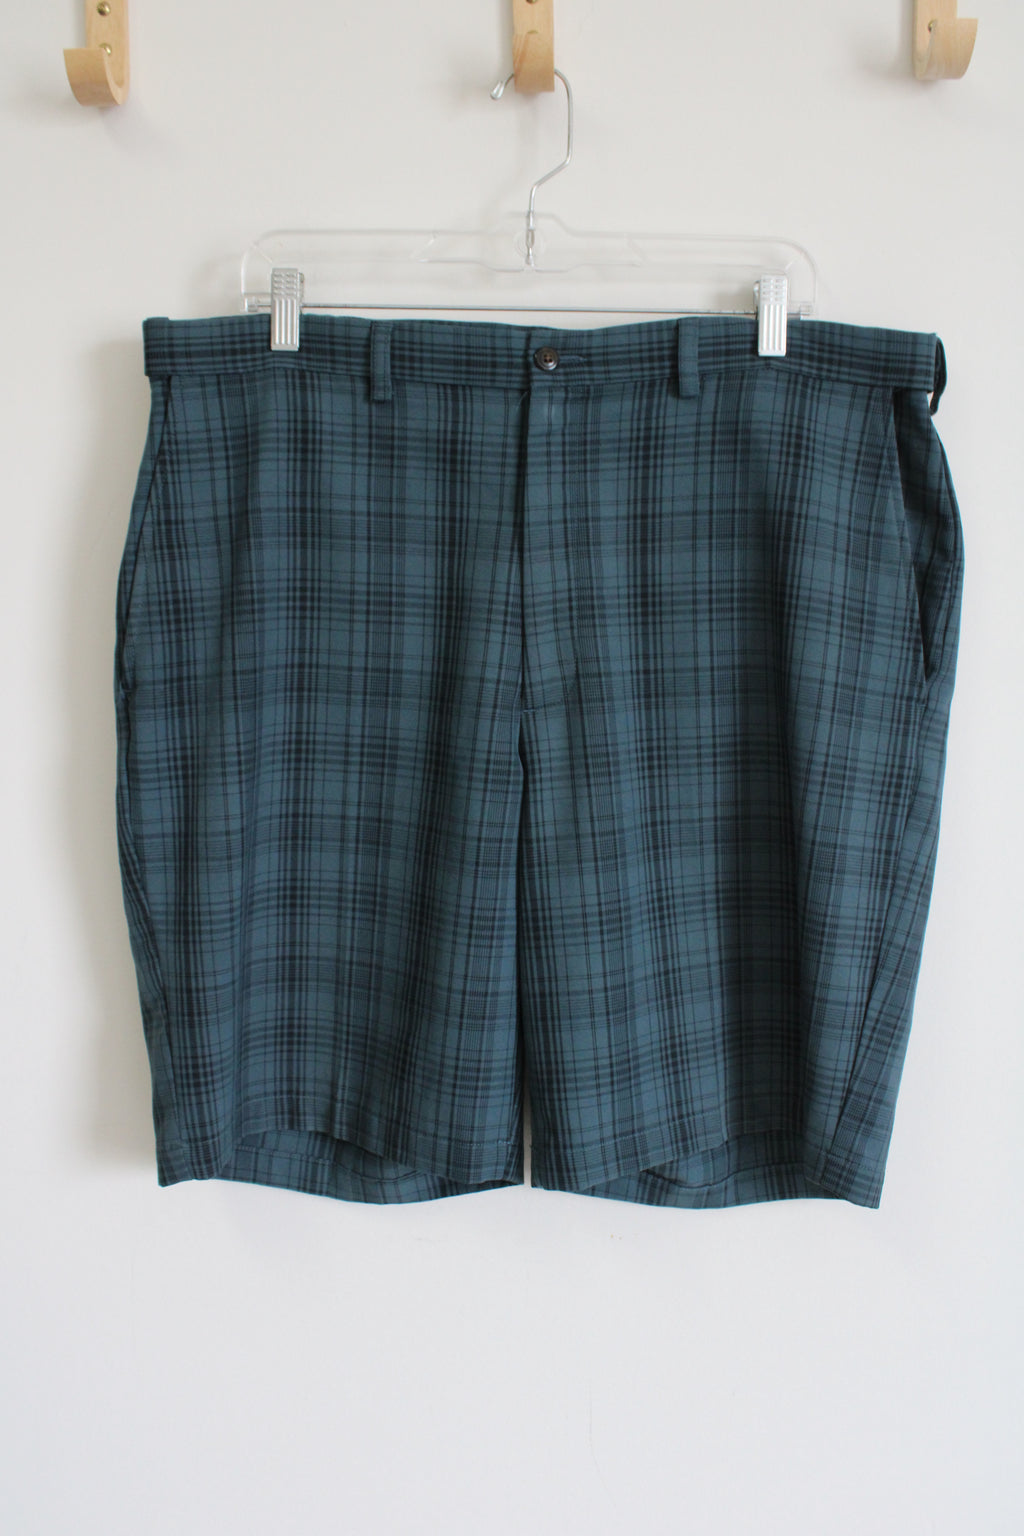 Haggar Blue Plaid Shorts | 36